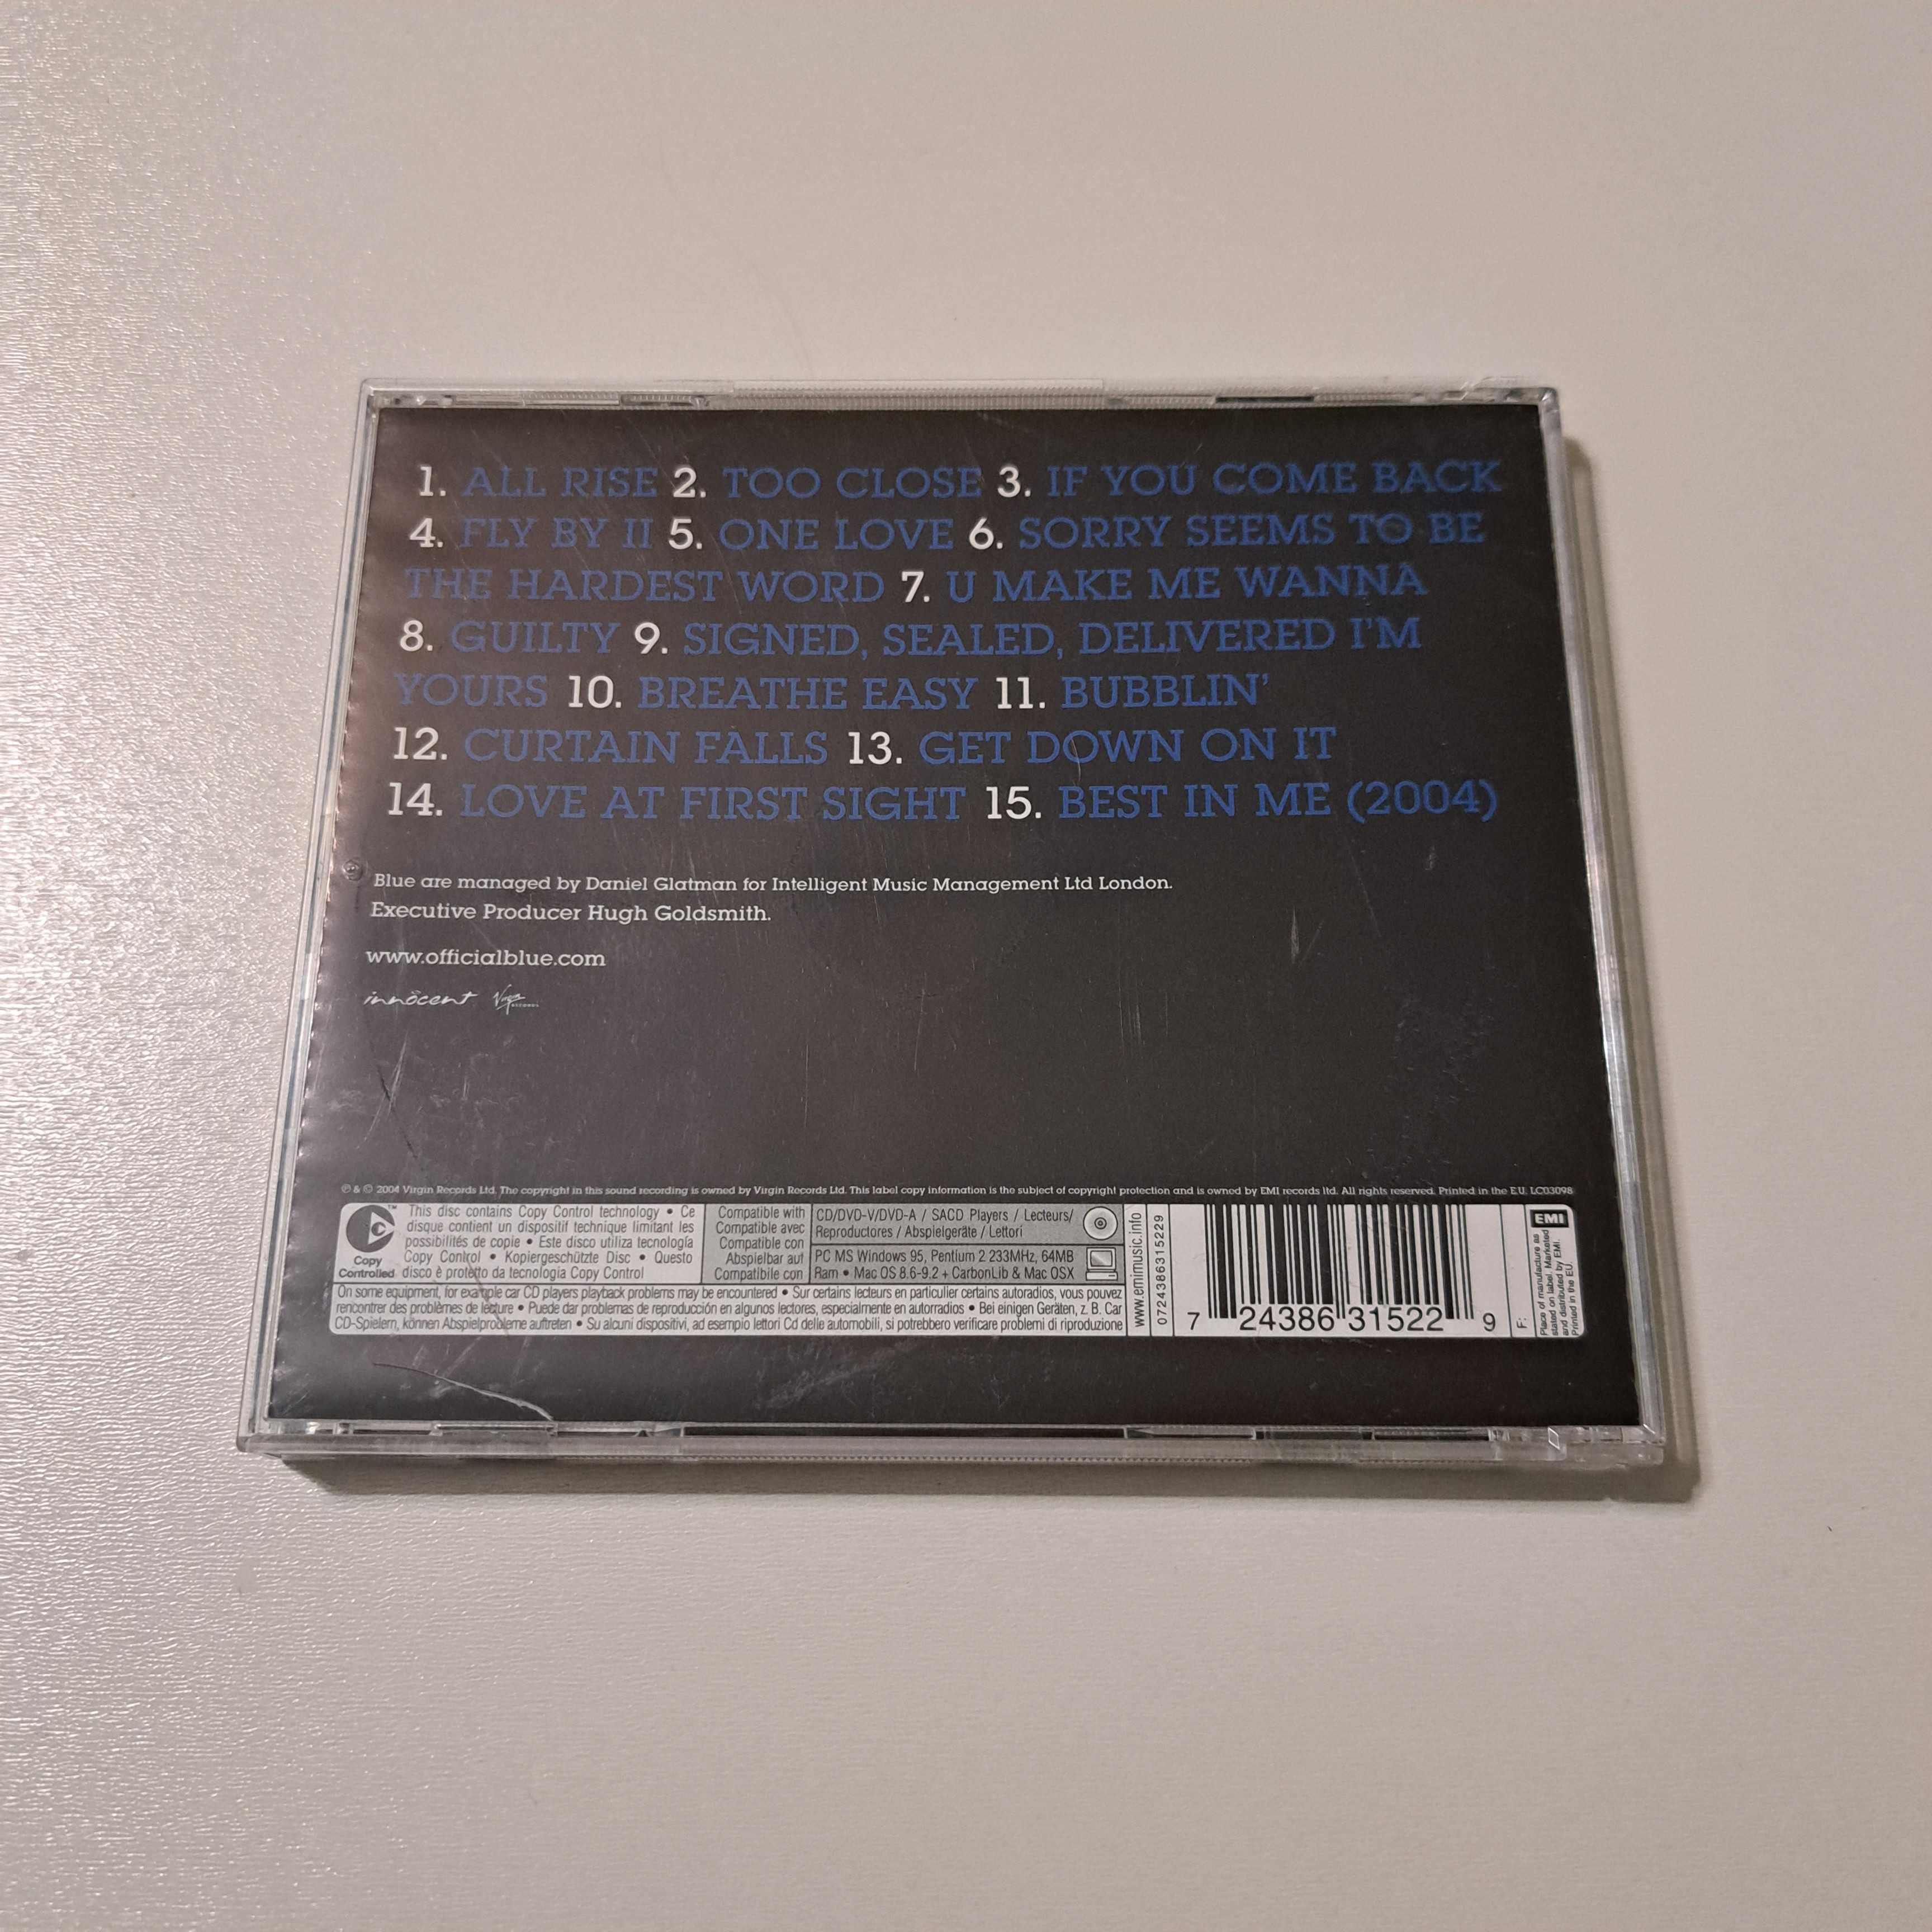 Płyta CD  Best Of Blue  nr538